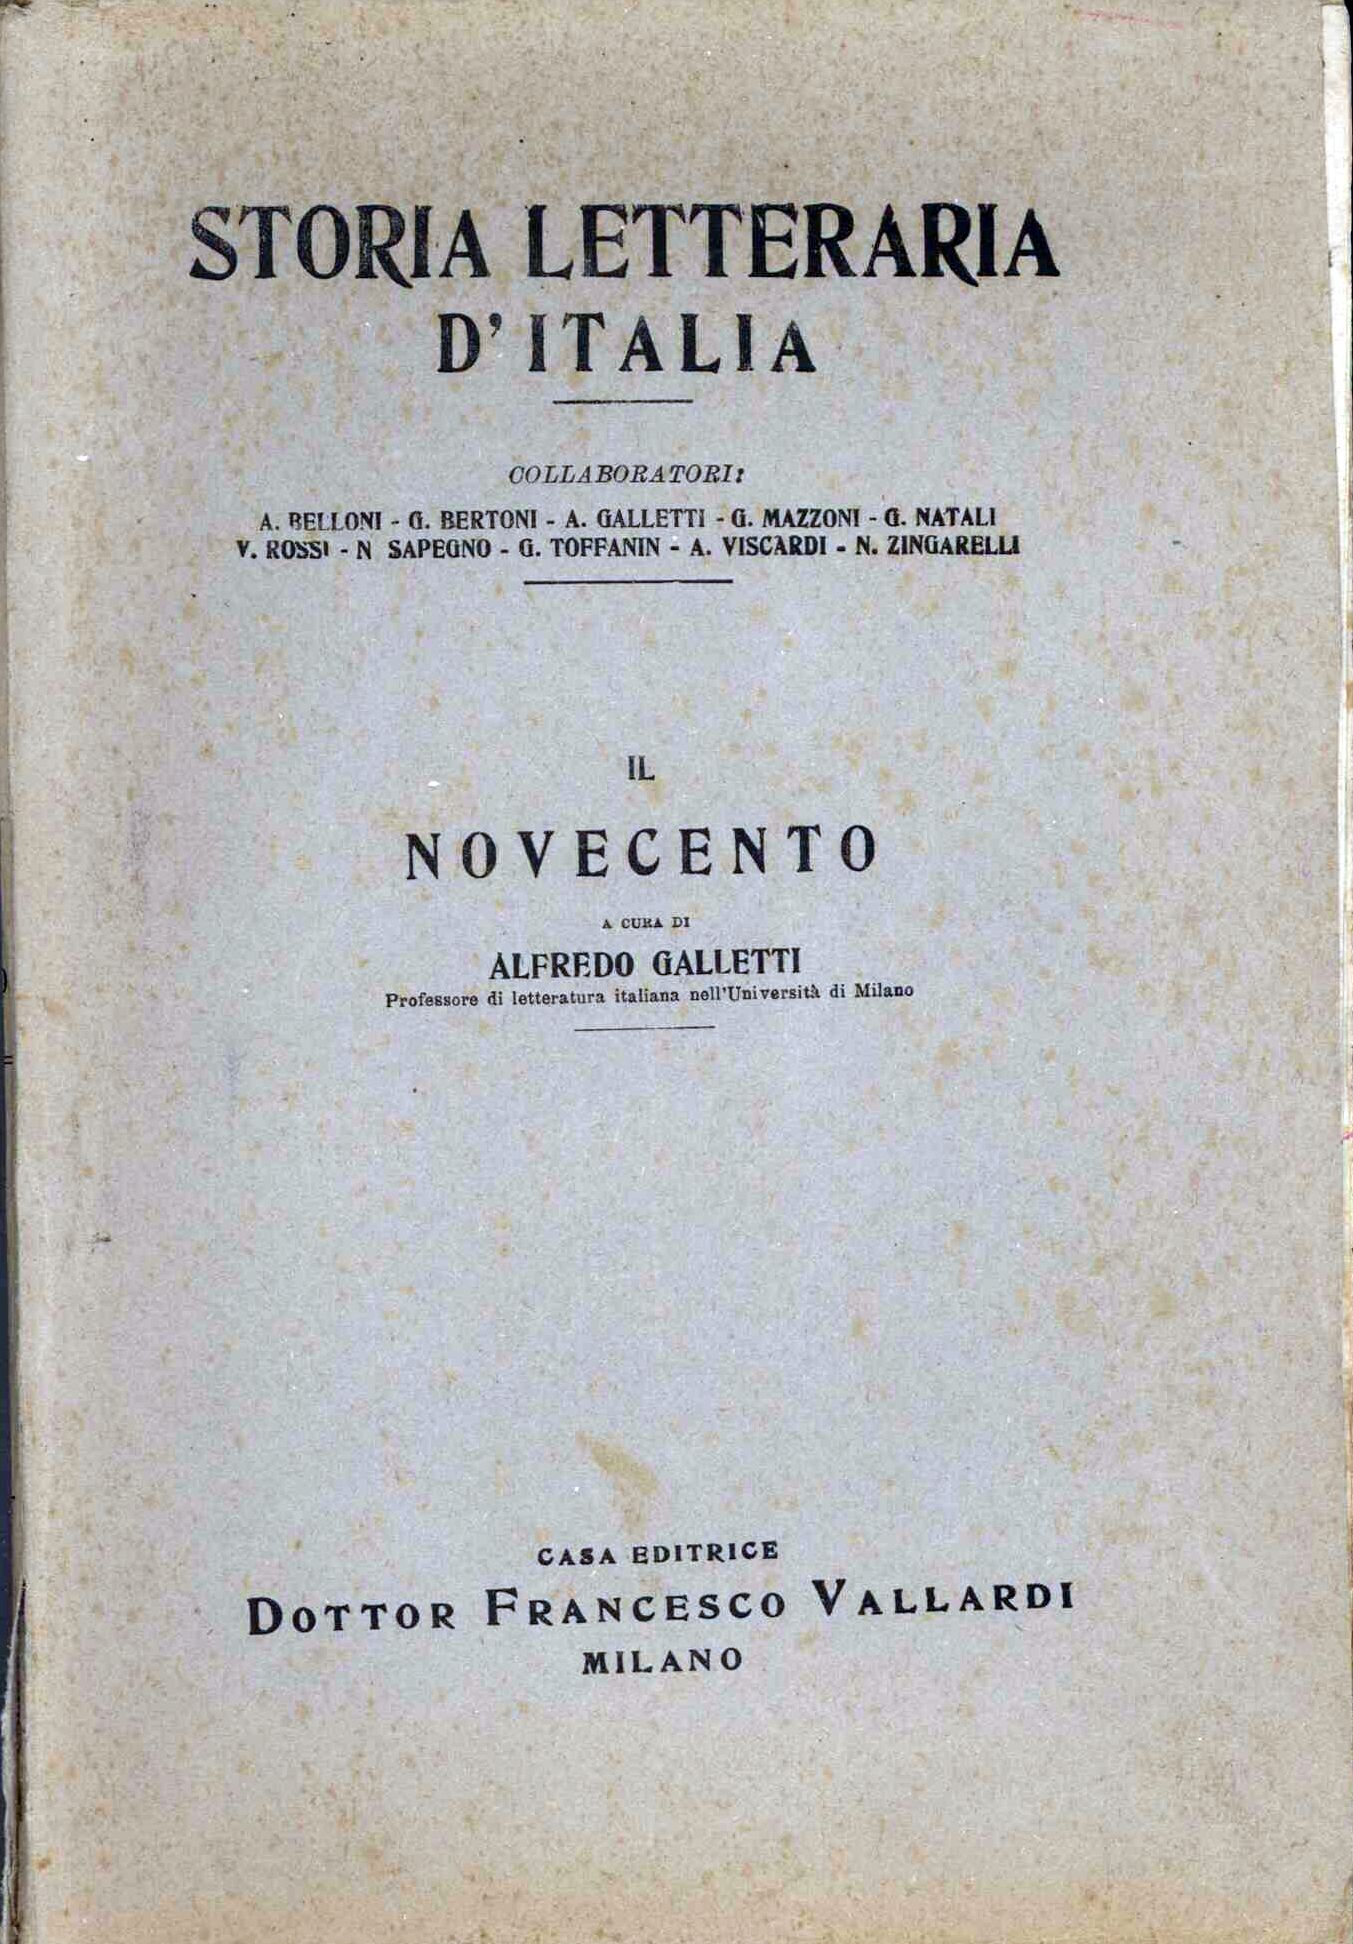 Novecento (il) Storia lett. d'Italia